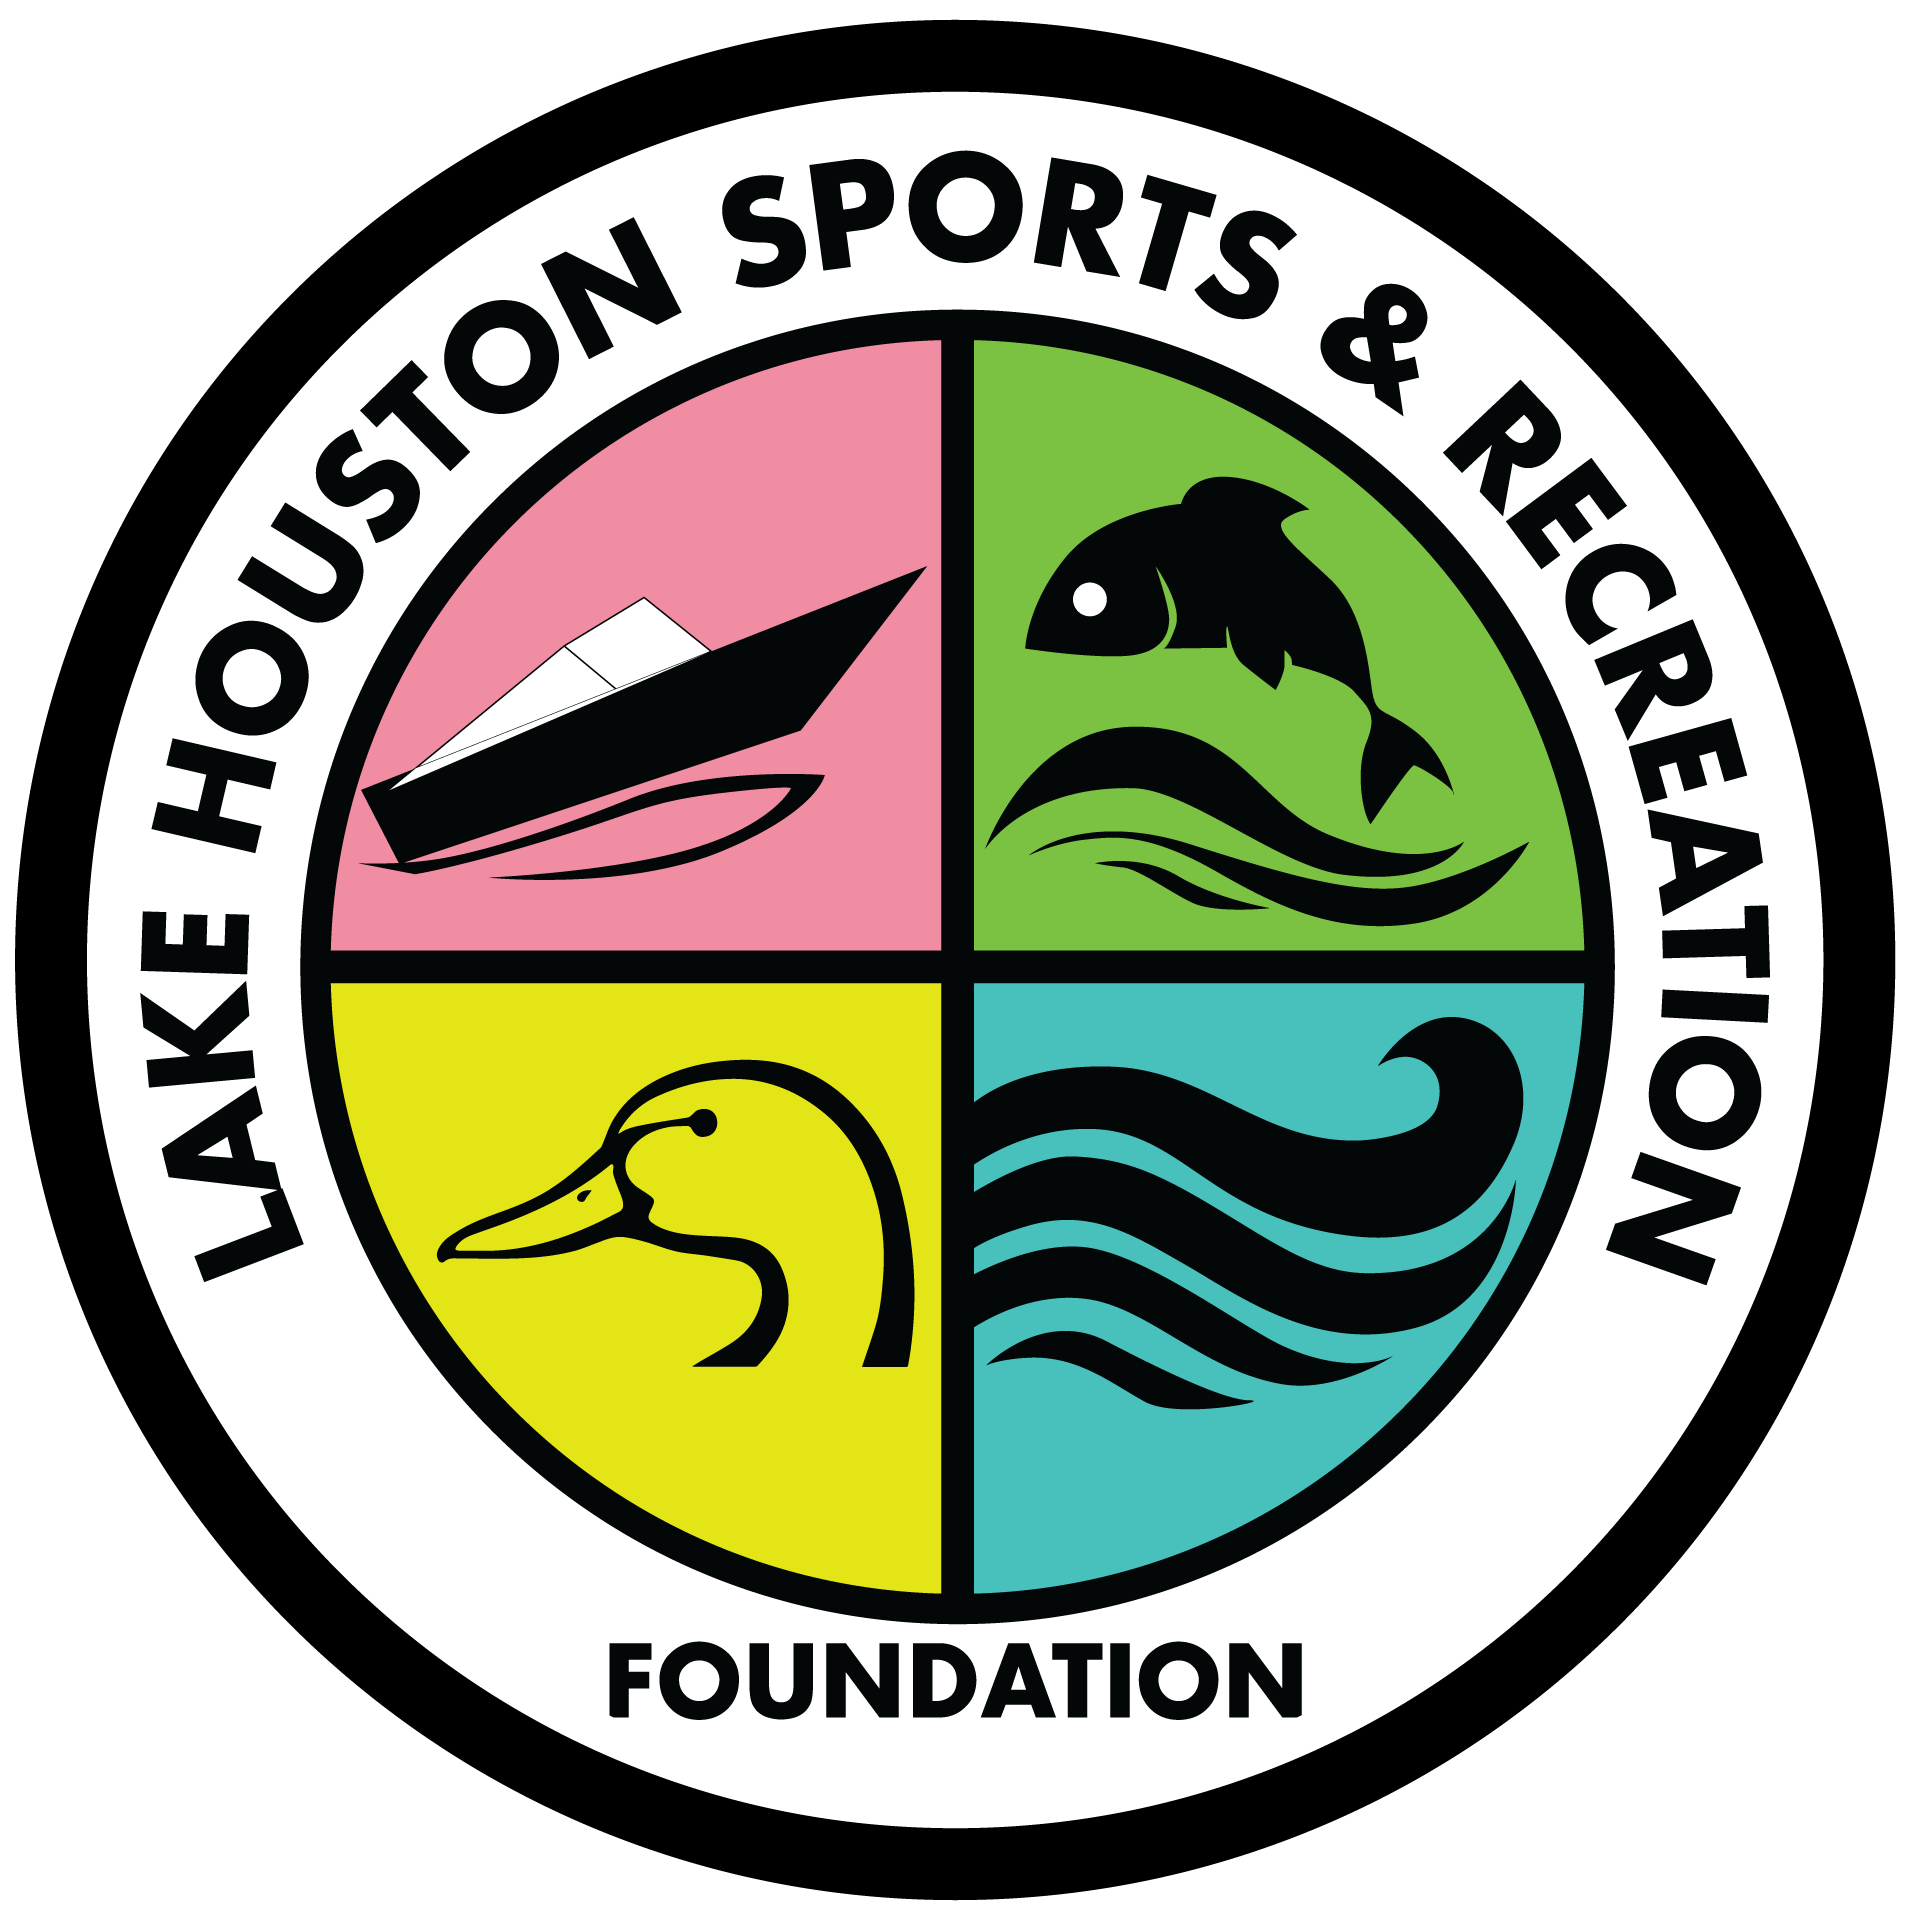 Lake Houston Sports and Recreation